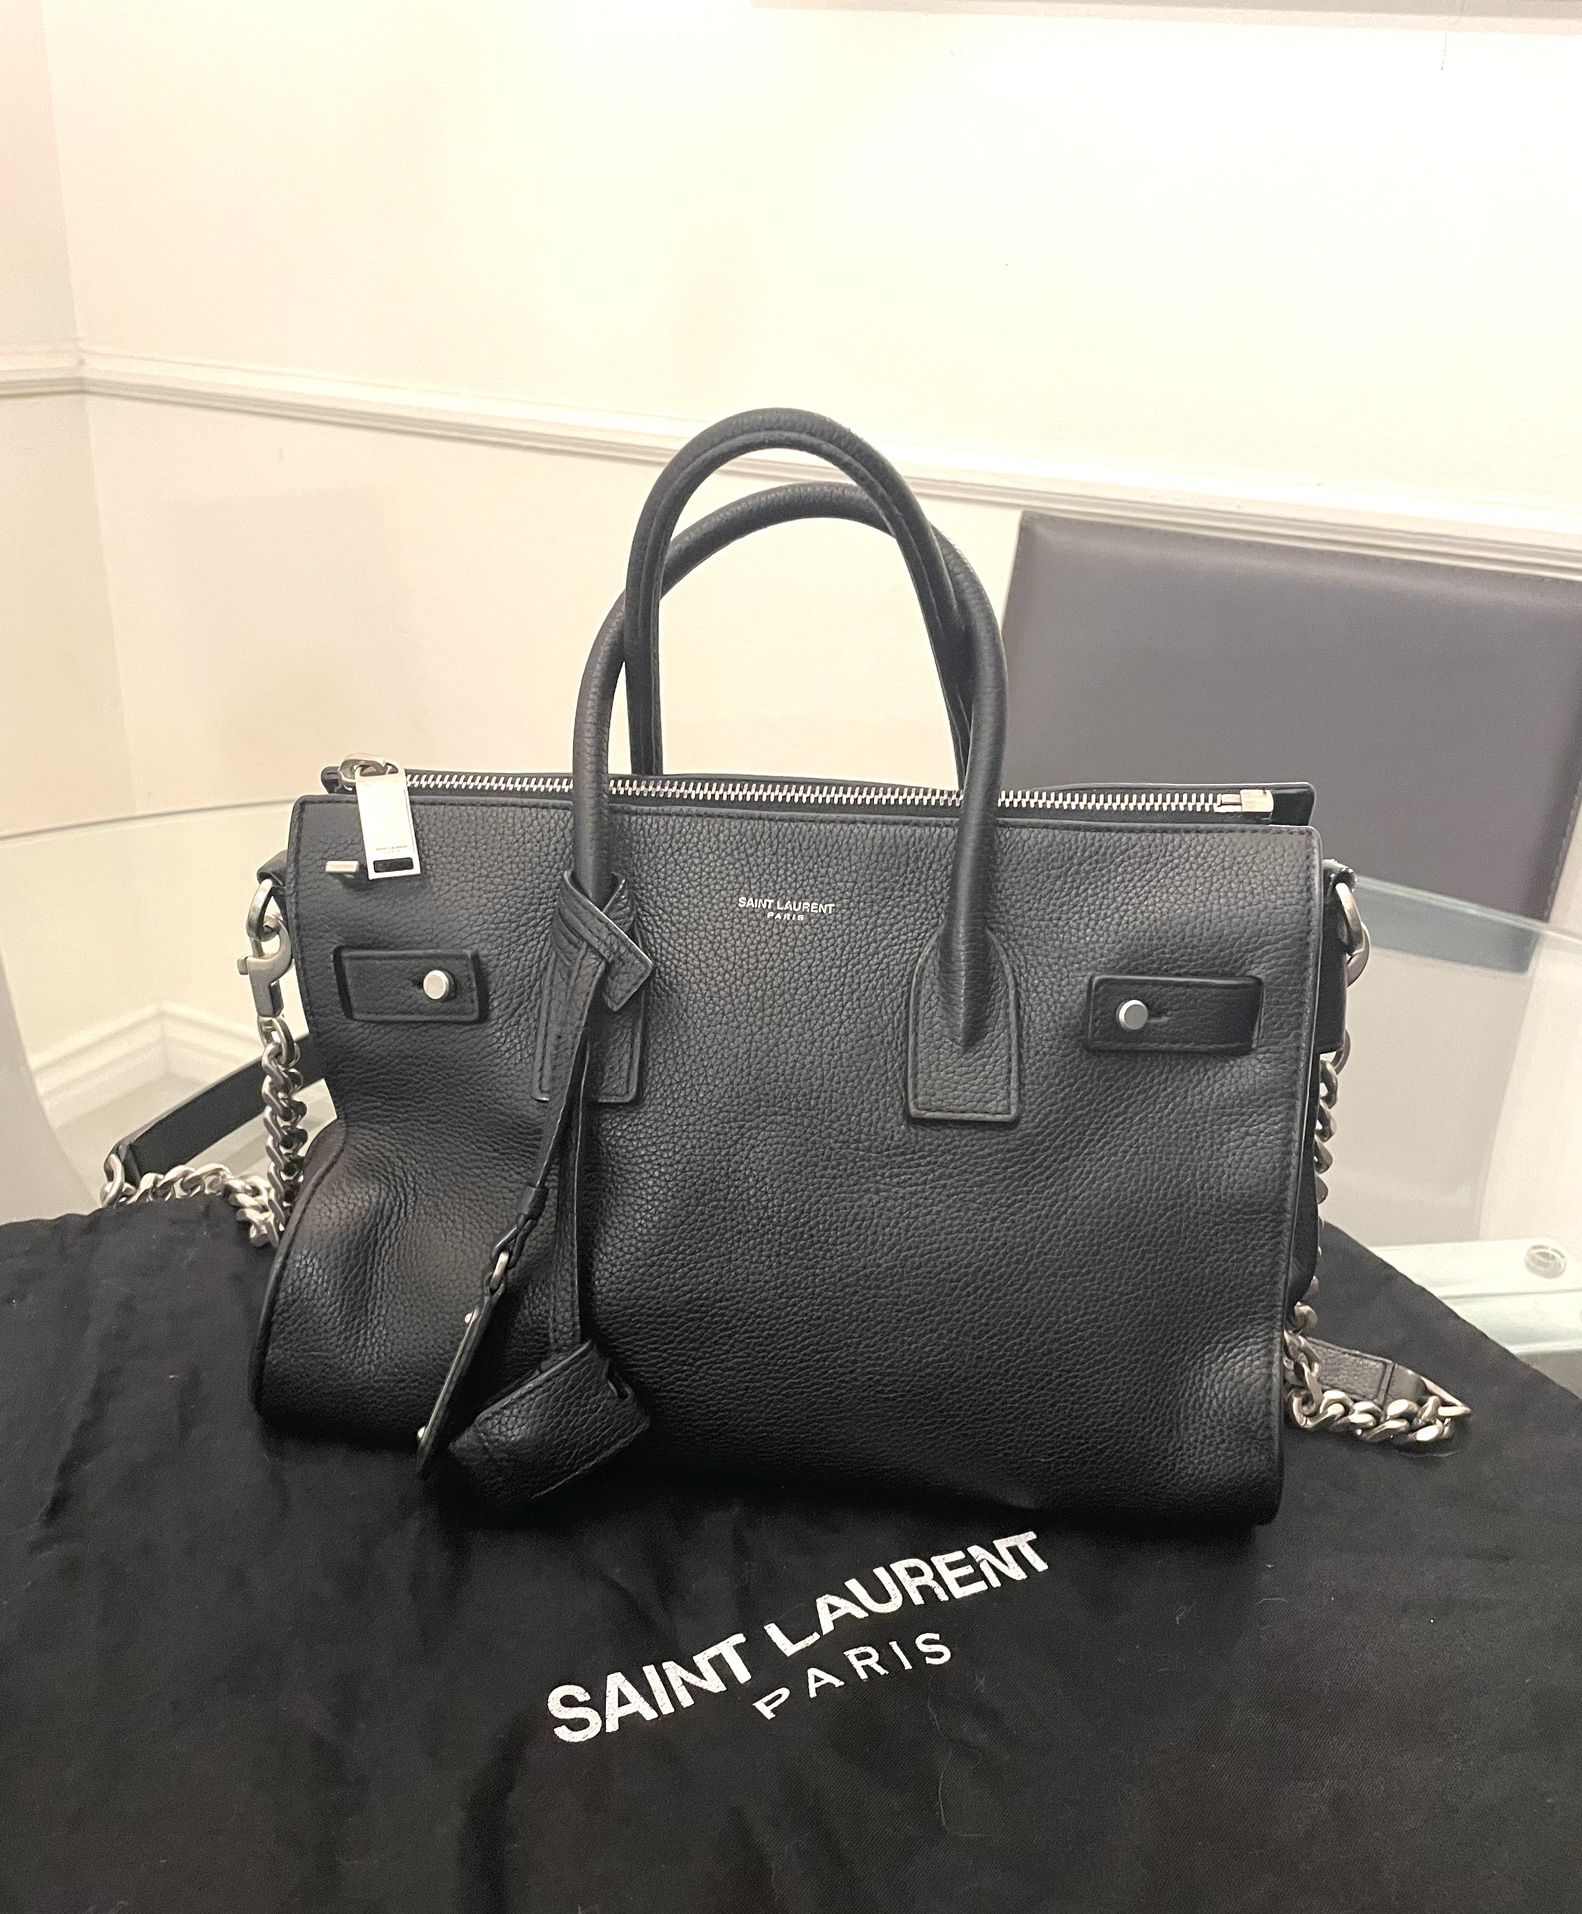 Saint Laurent West Hollywood Handbag